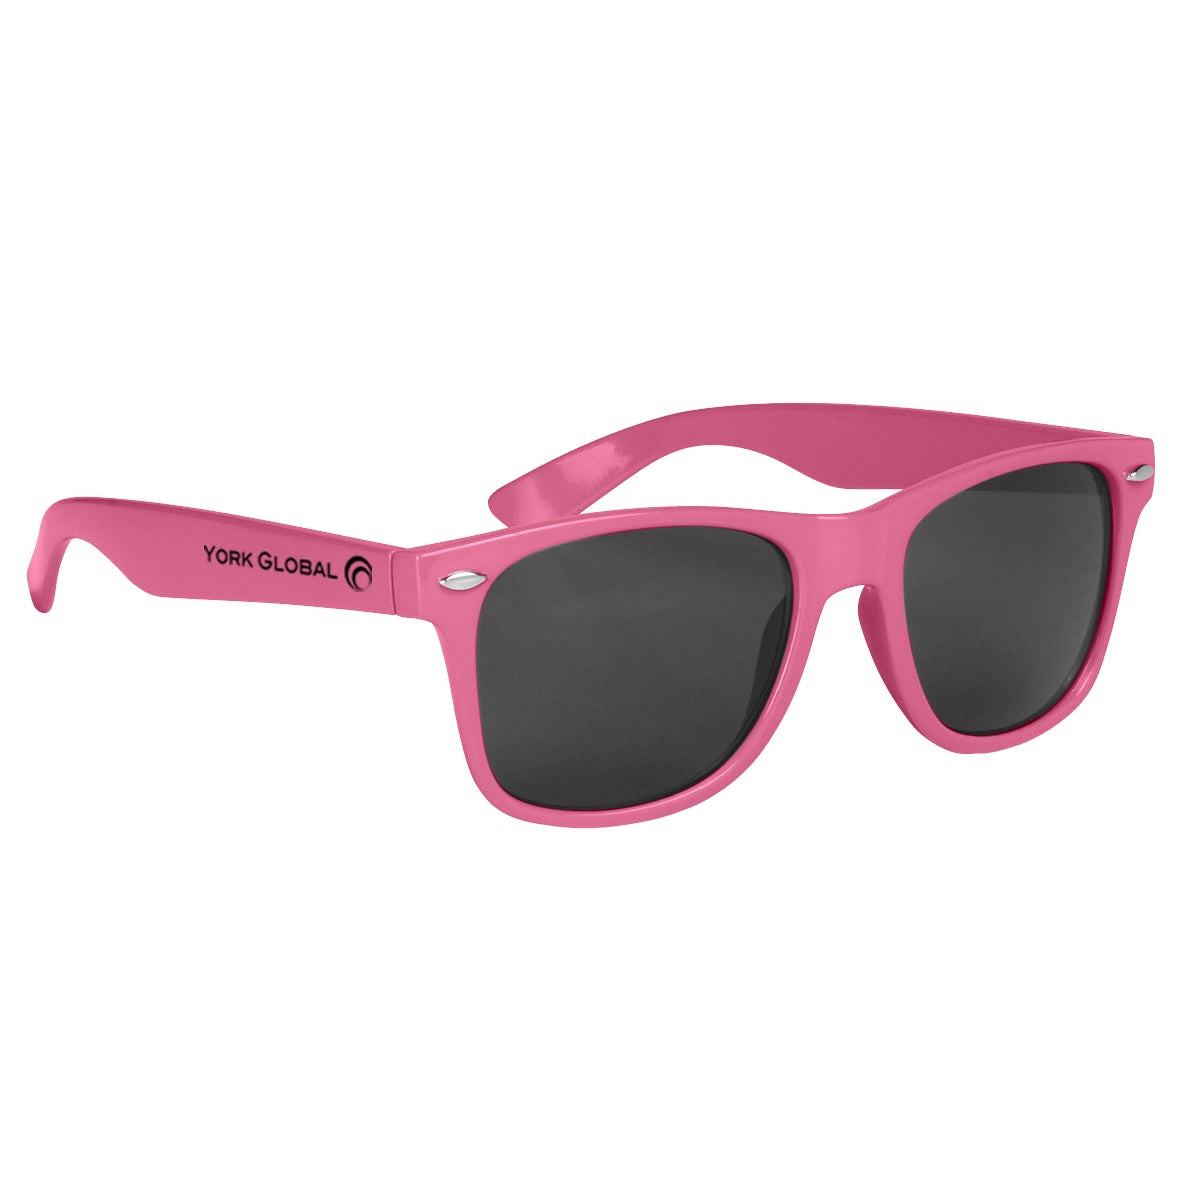 Malibu Sunglasses Sunglasses Hit Promo Pink Single Color 